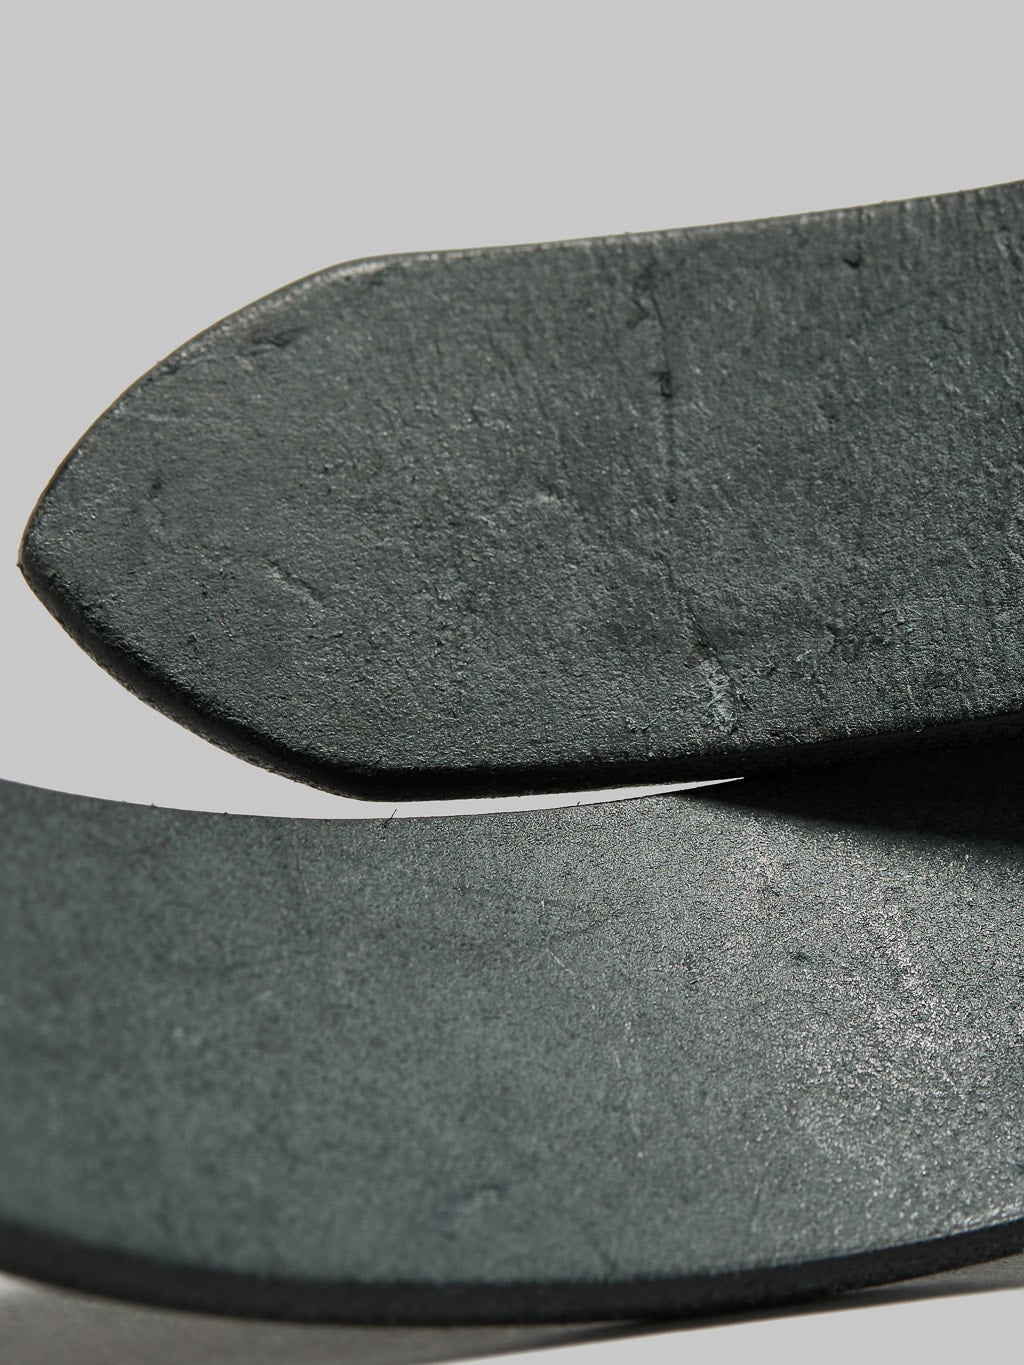 Sugar Cane leather garrison belt black fabric texture